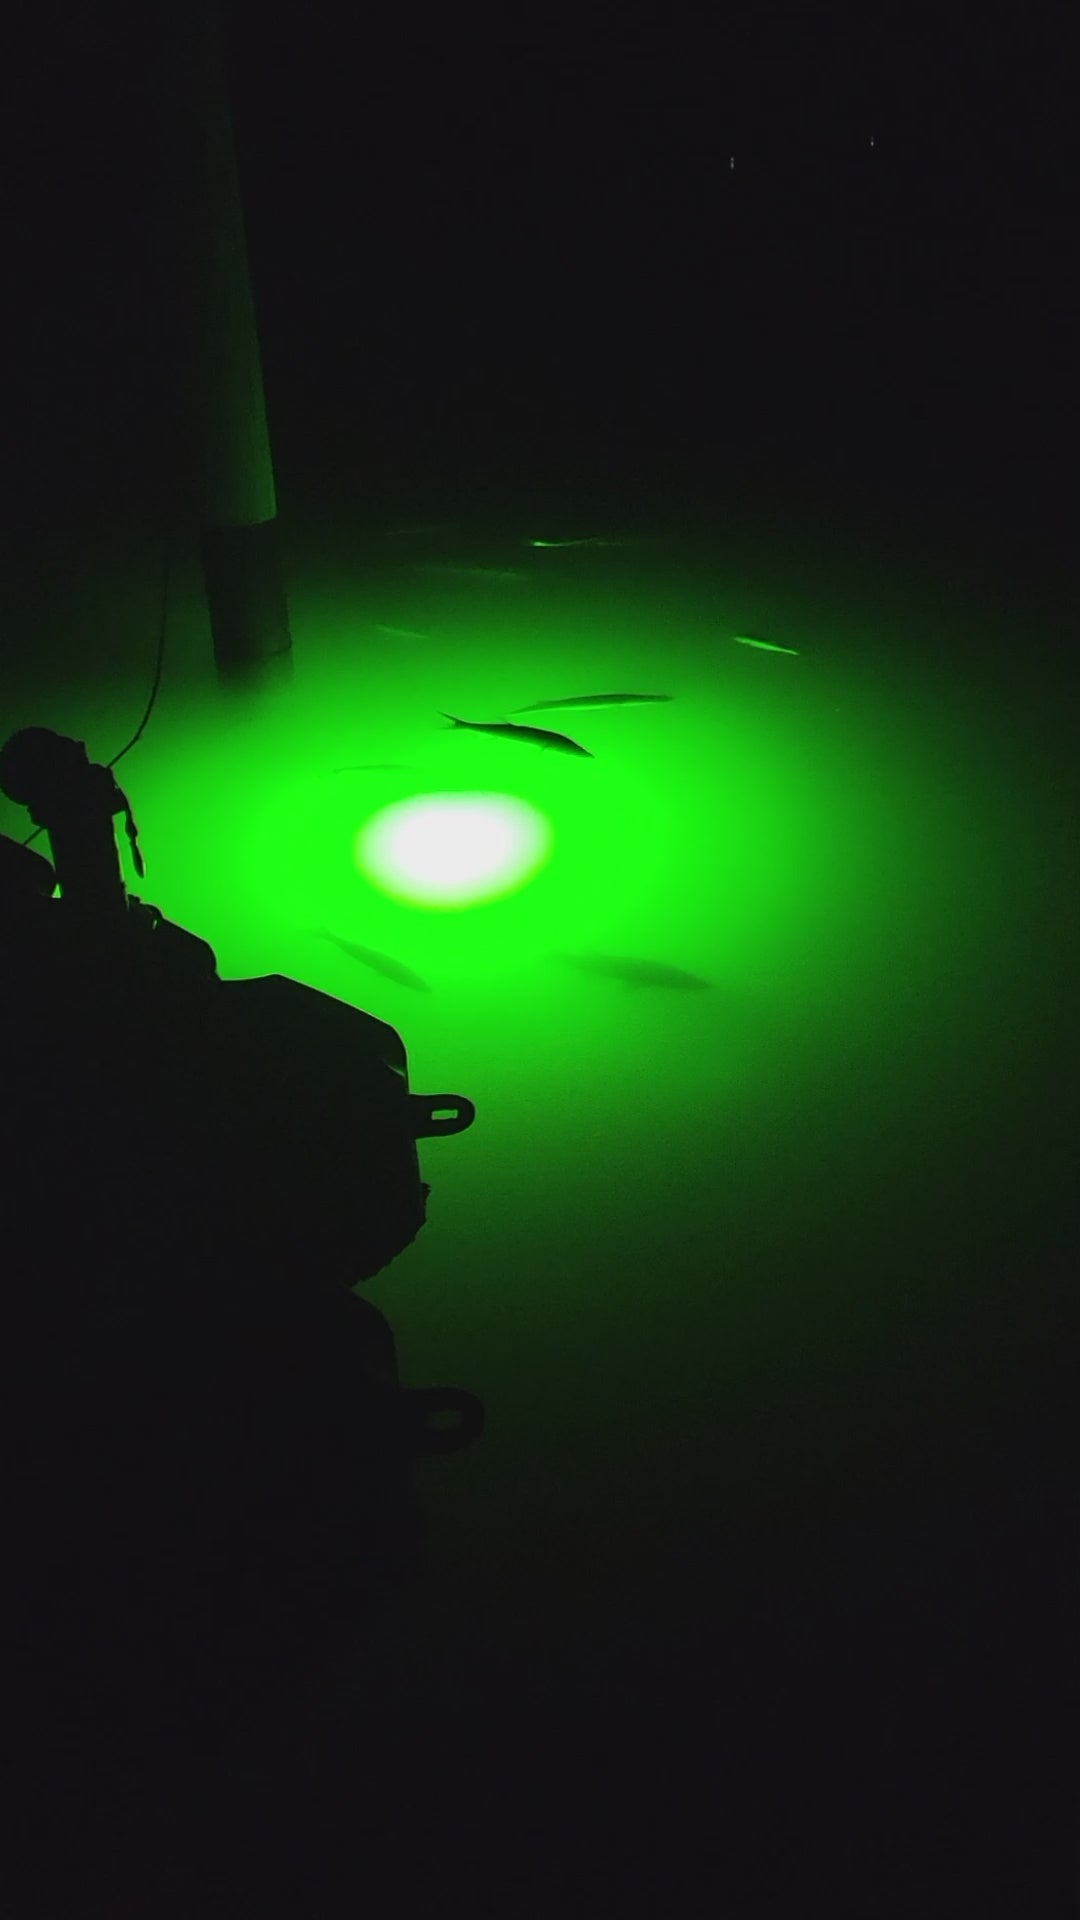 Power 400 Watt Underwater Dock Light - Single Bulb